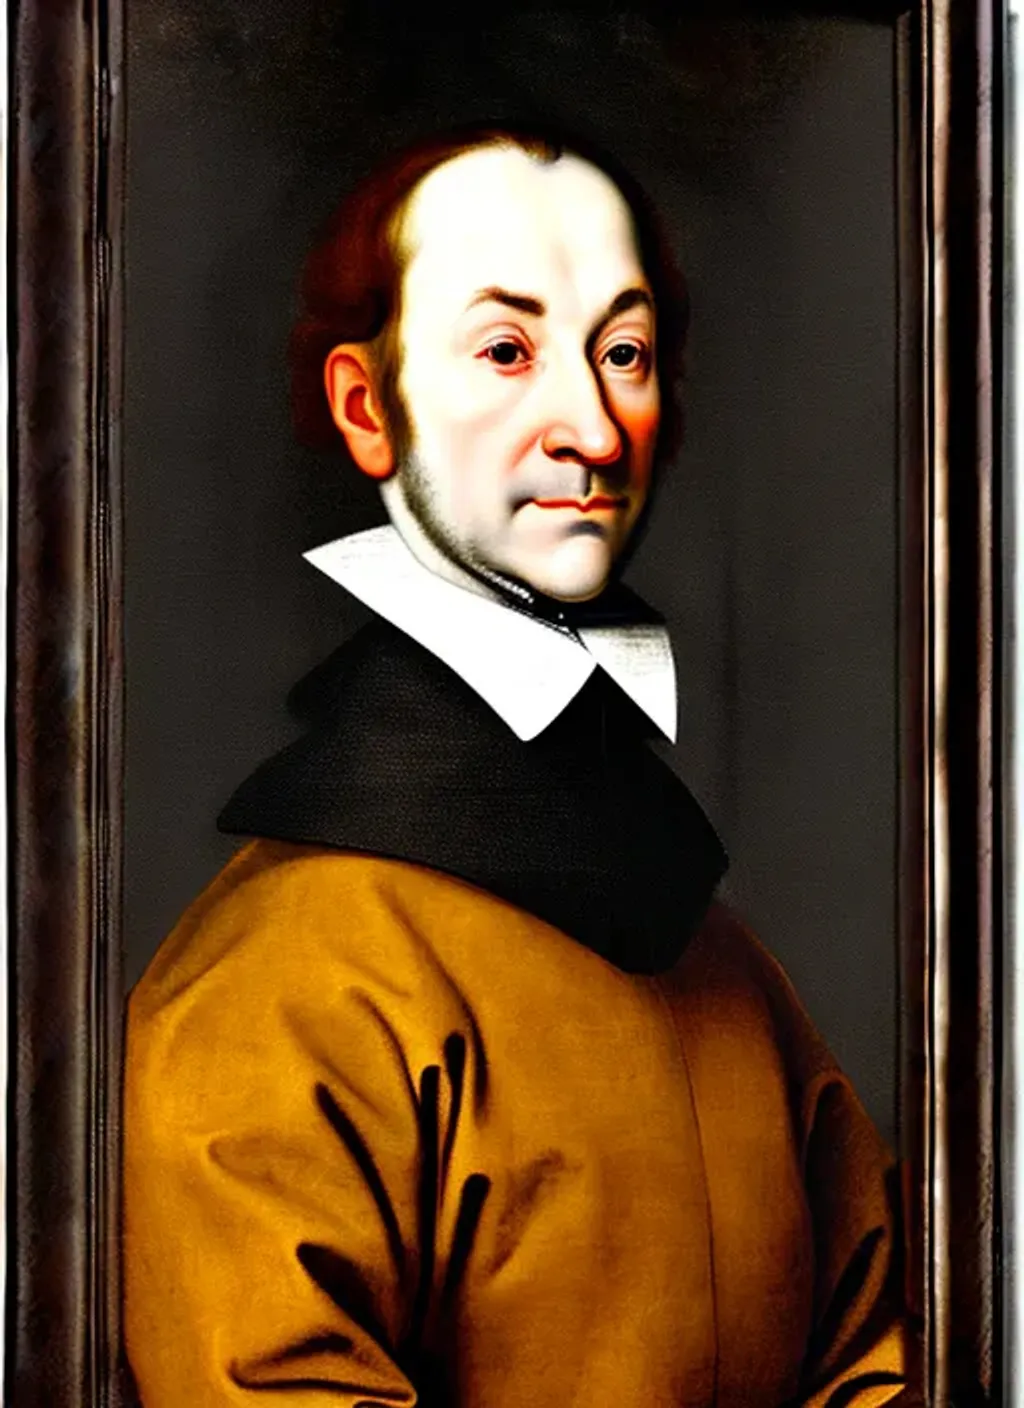 Prompt: Portrait of Saul Goodman by Sofonisba Anguissola